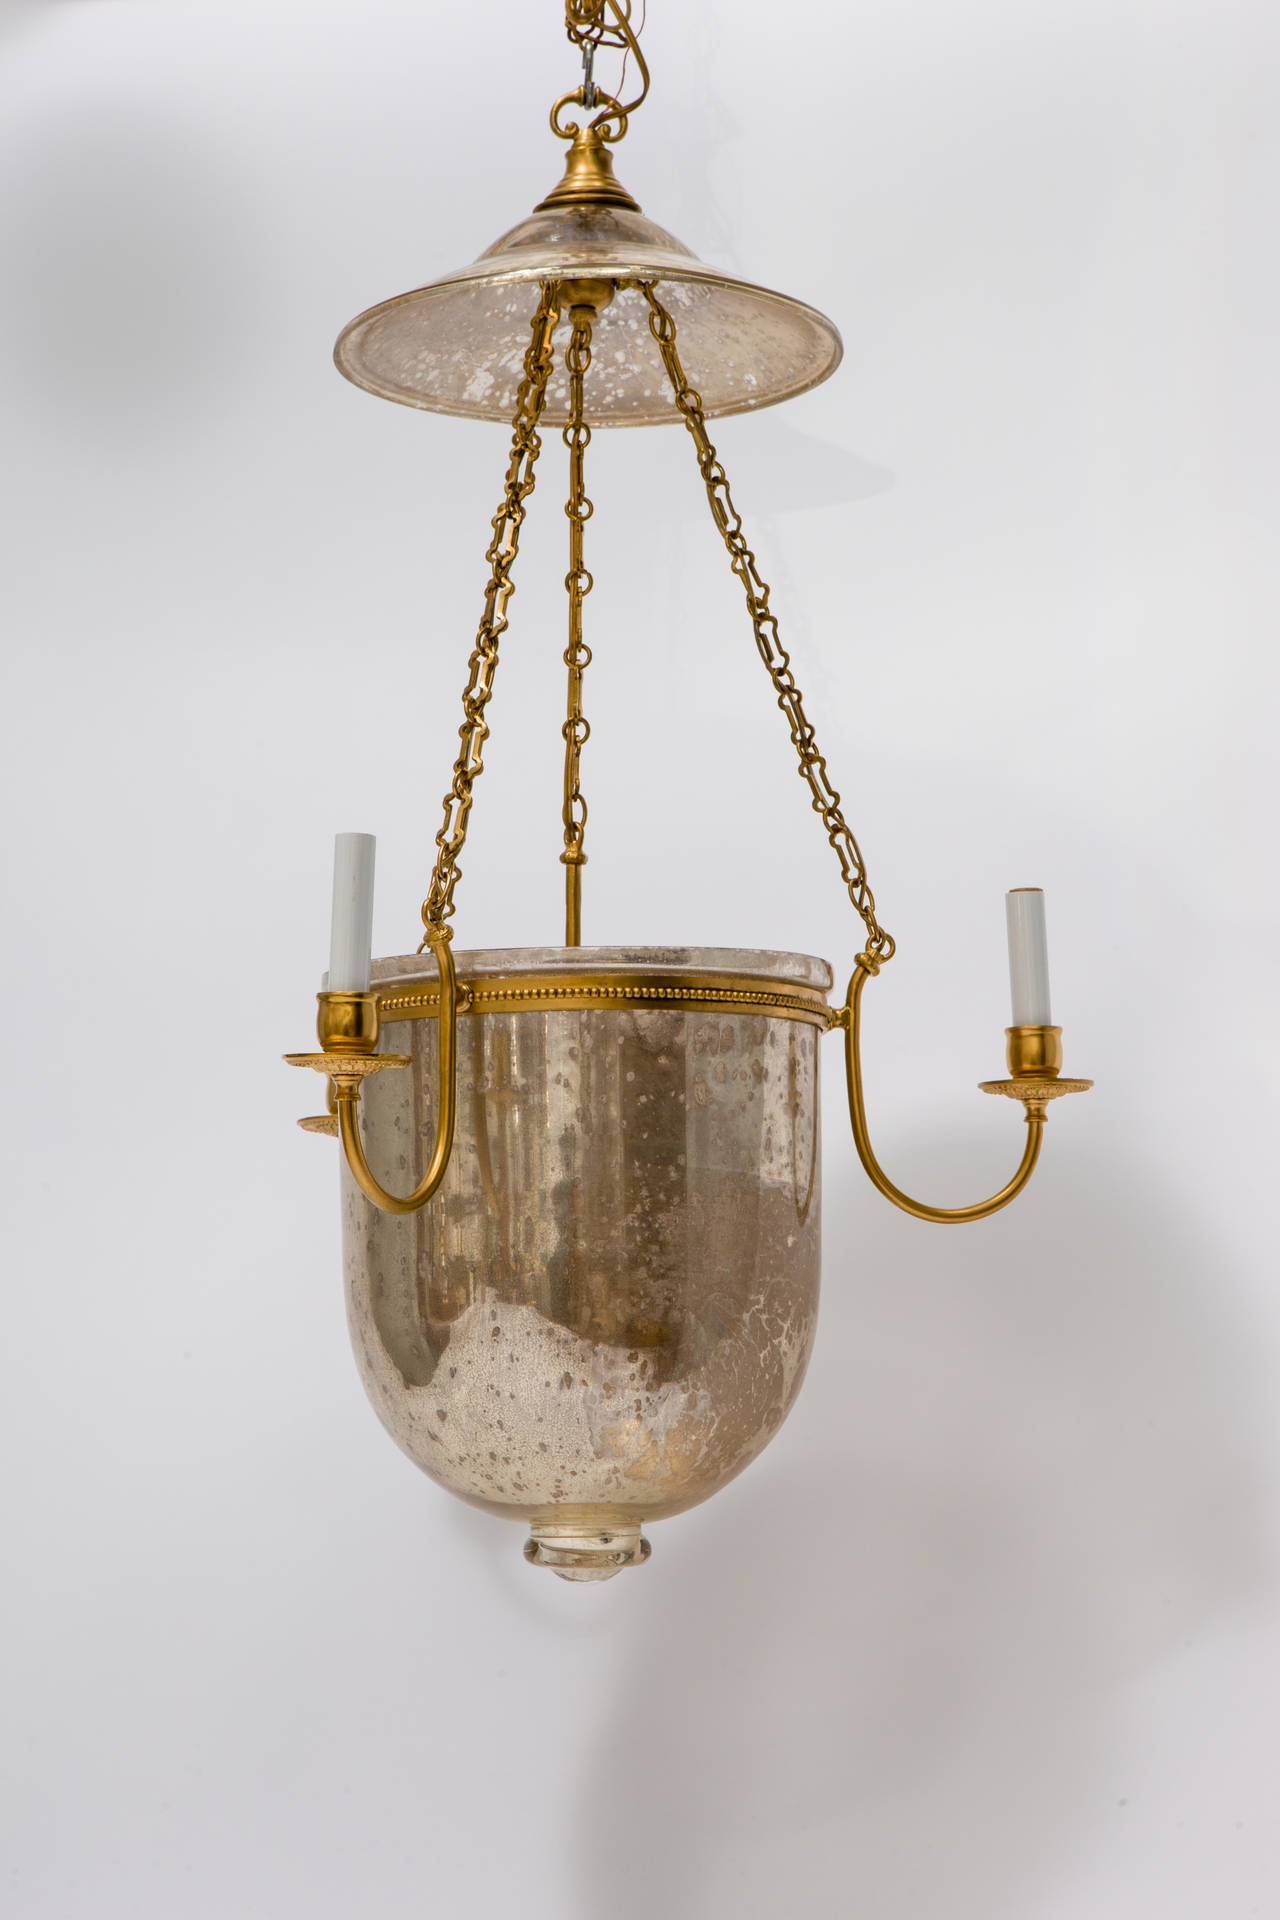 Hand-Crafted Mercury Glass Bell Jar Hurricane Lantern For Sale